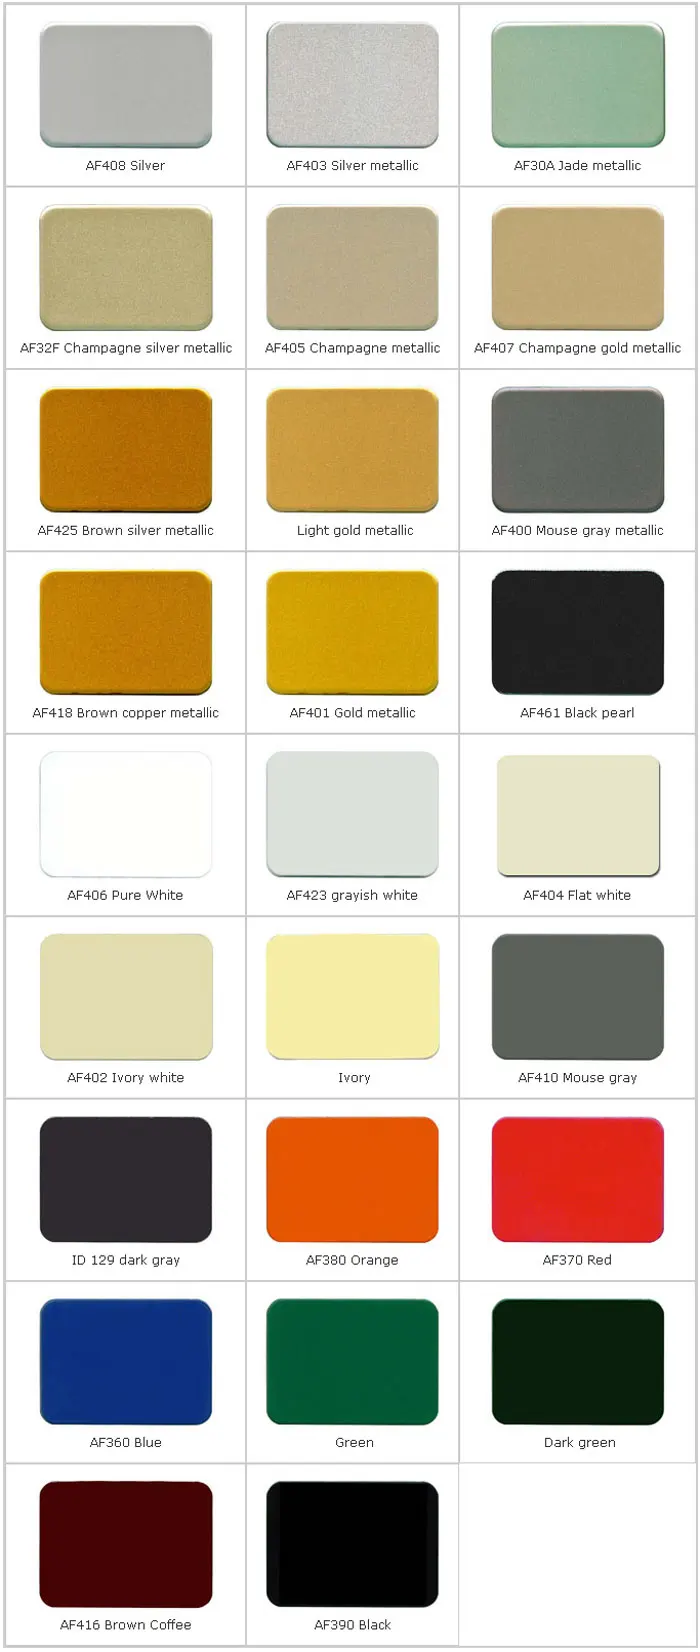 Alucobond Color Chart